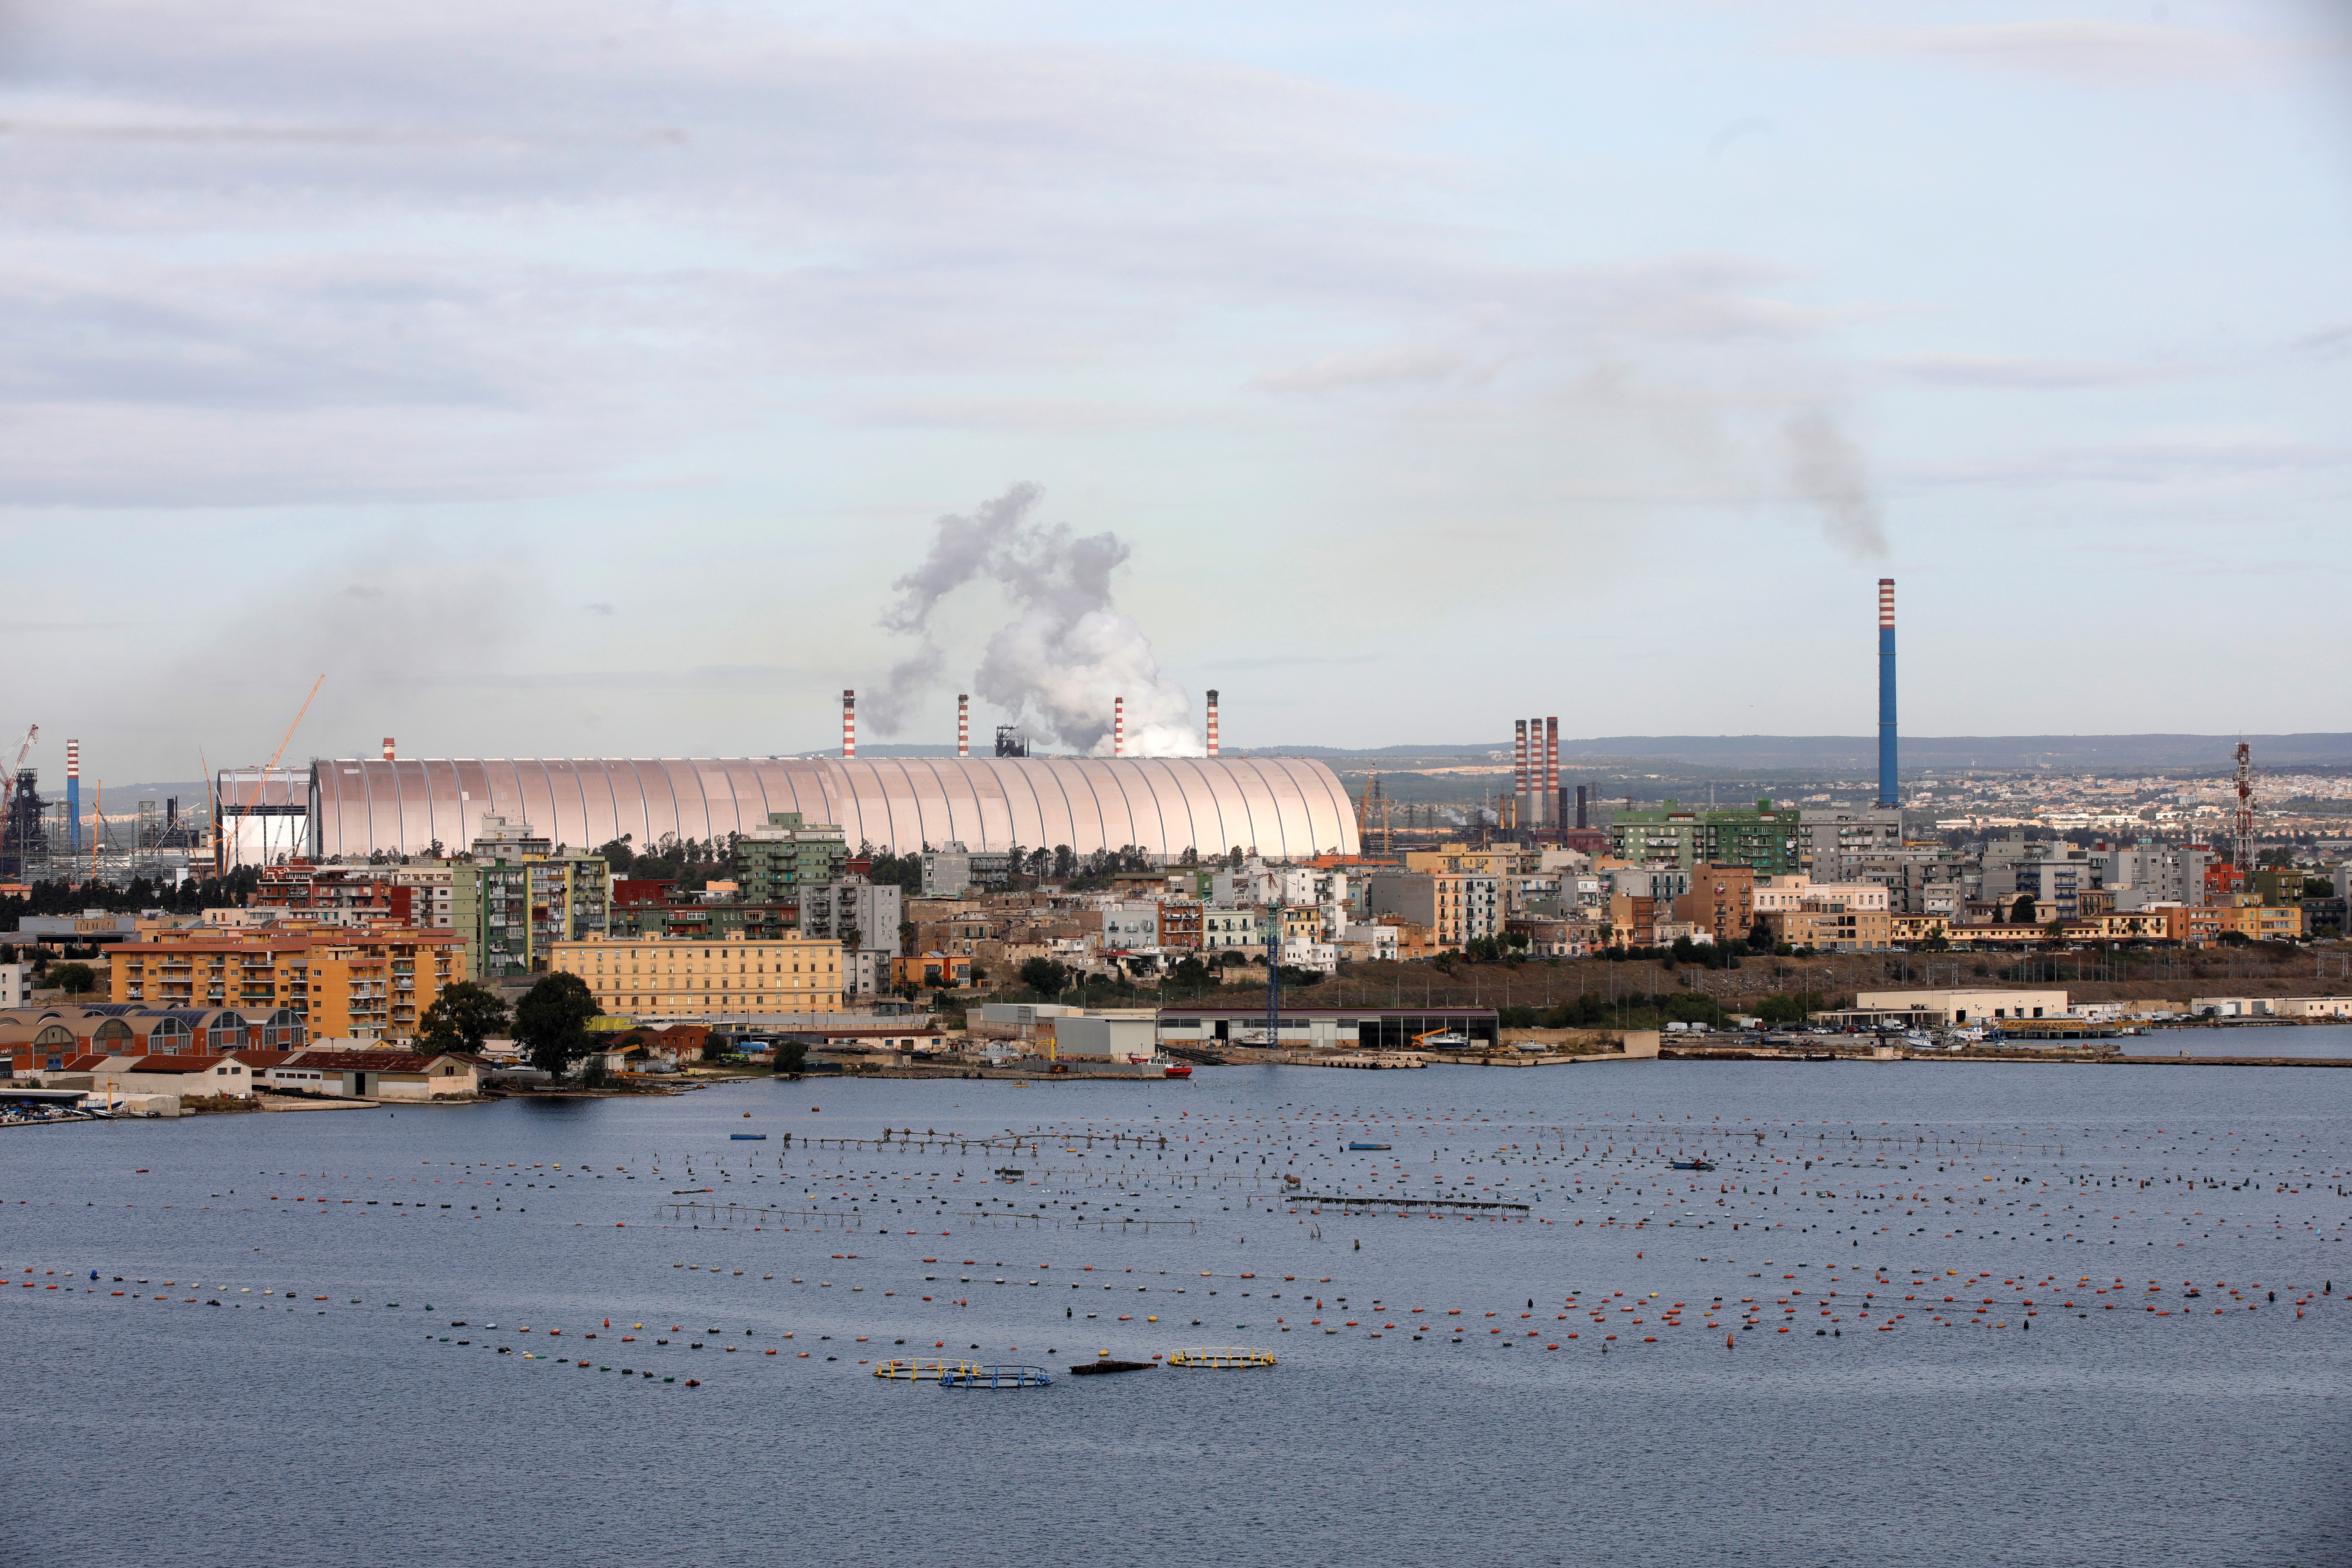 The Ilva steel plant is seen in Taranto